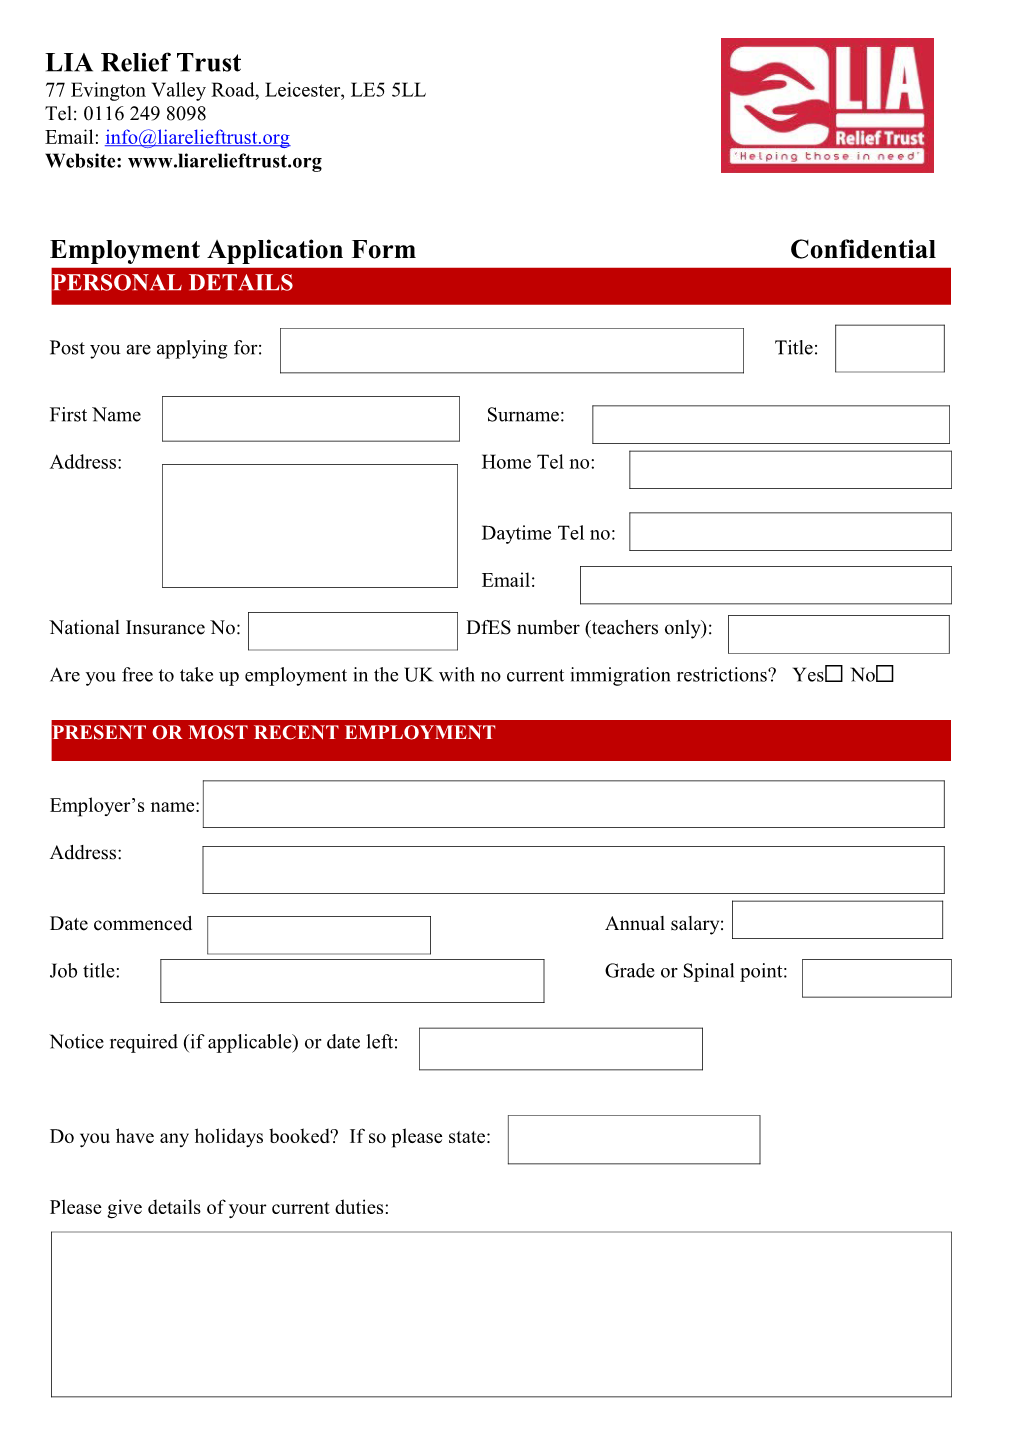 Employment Application Form Confidential